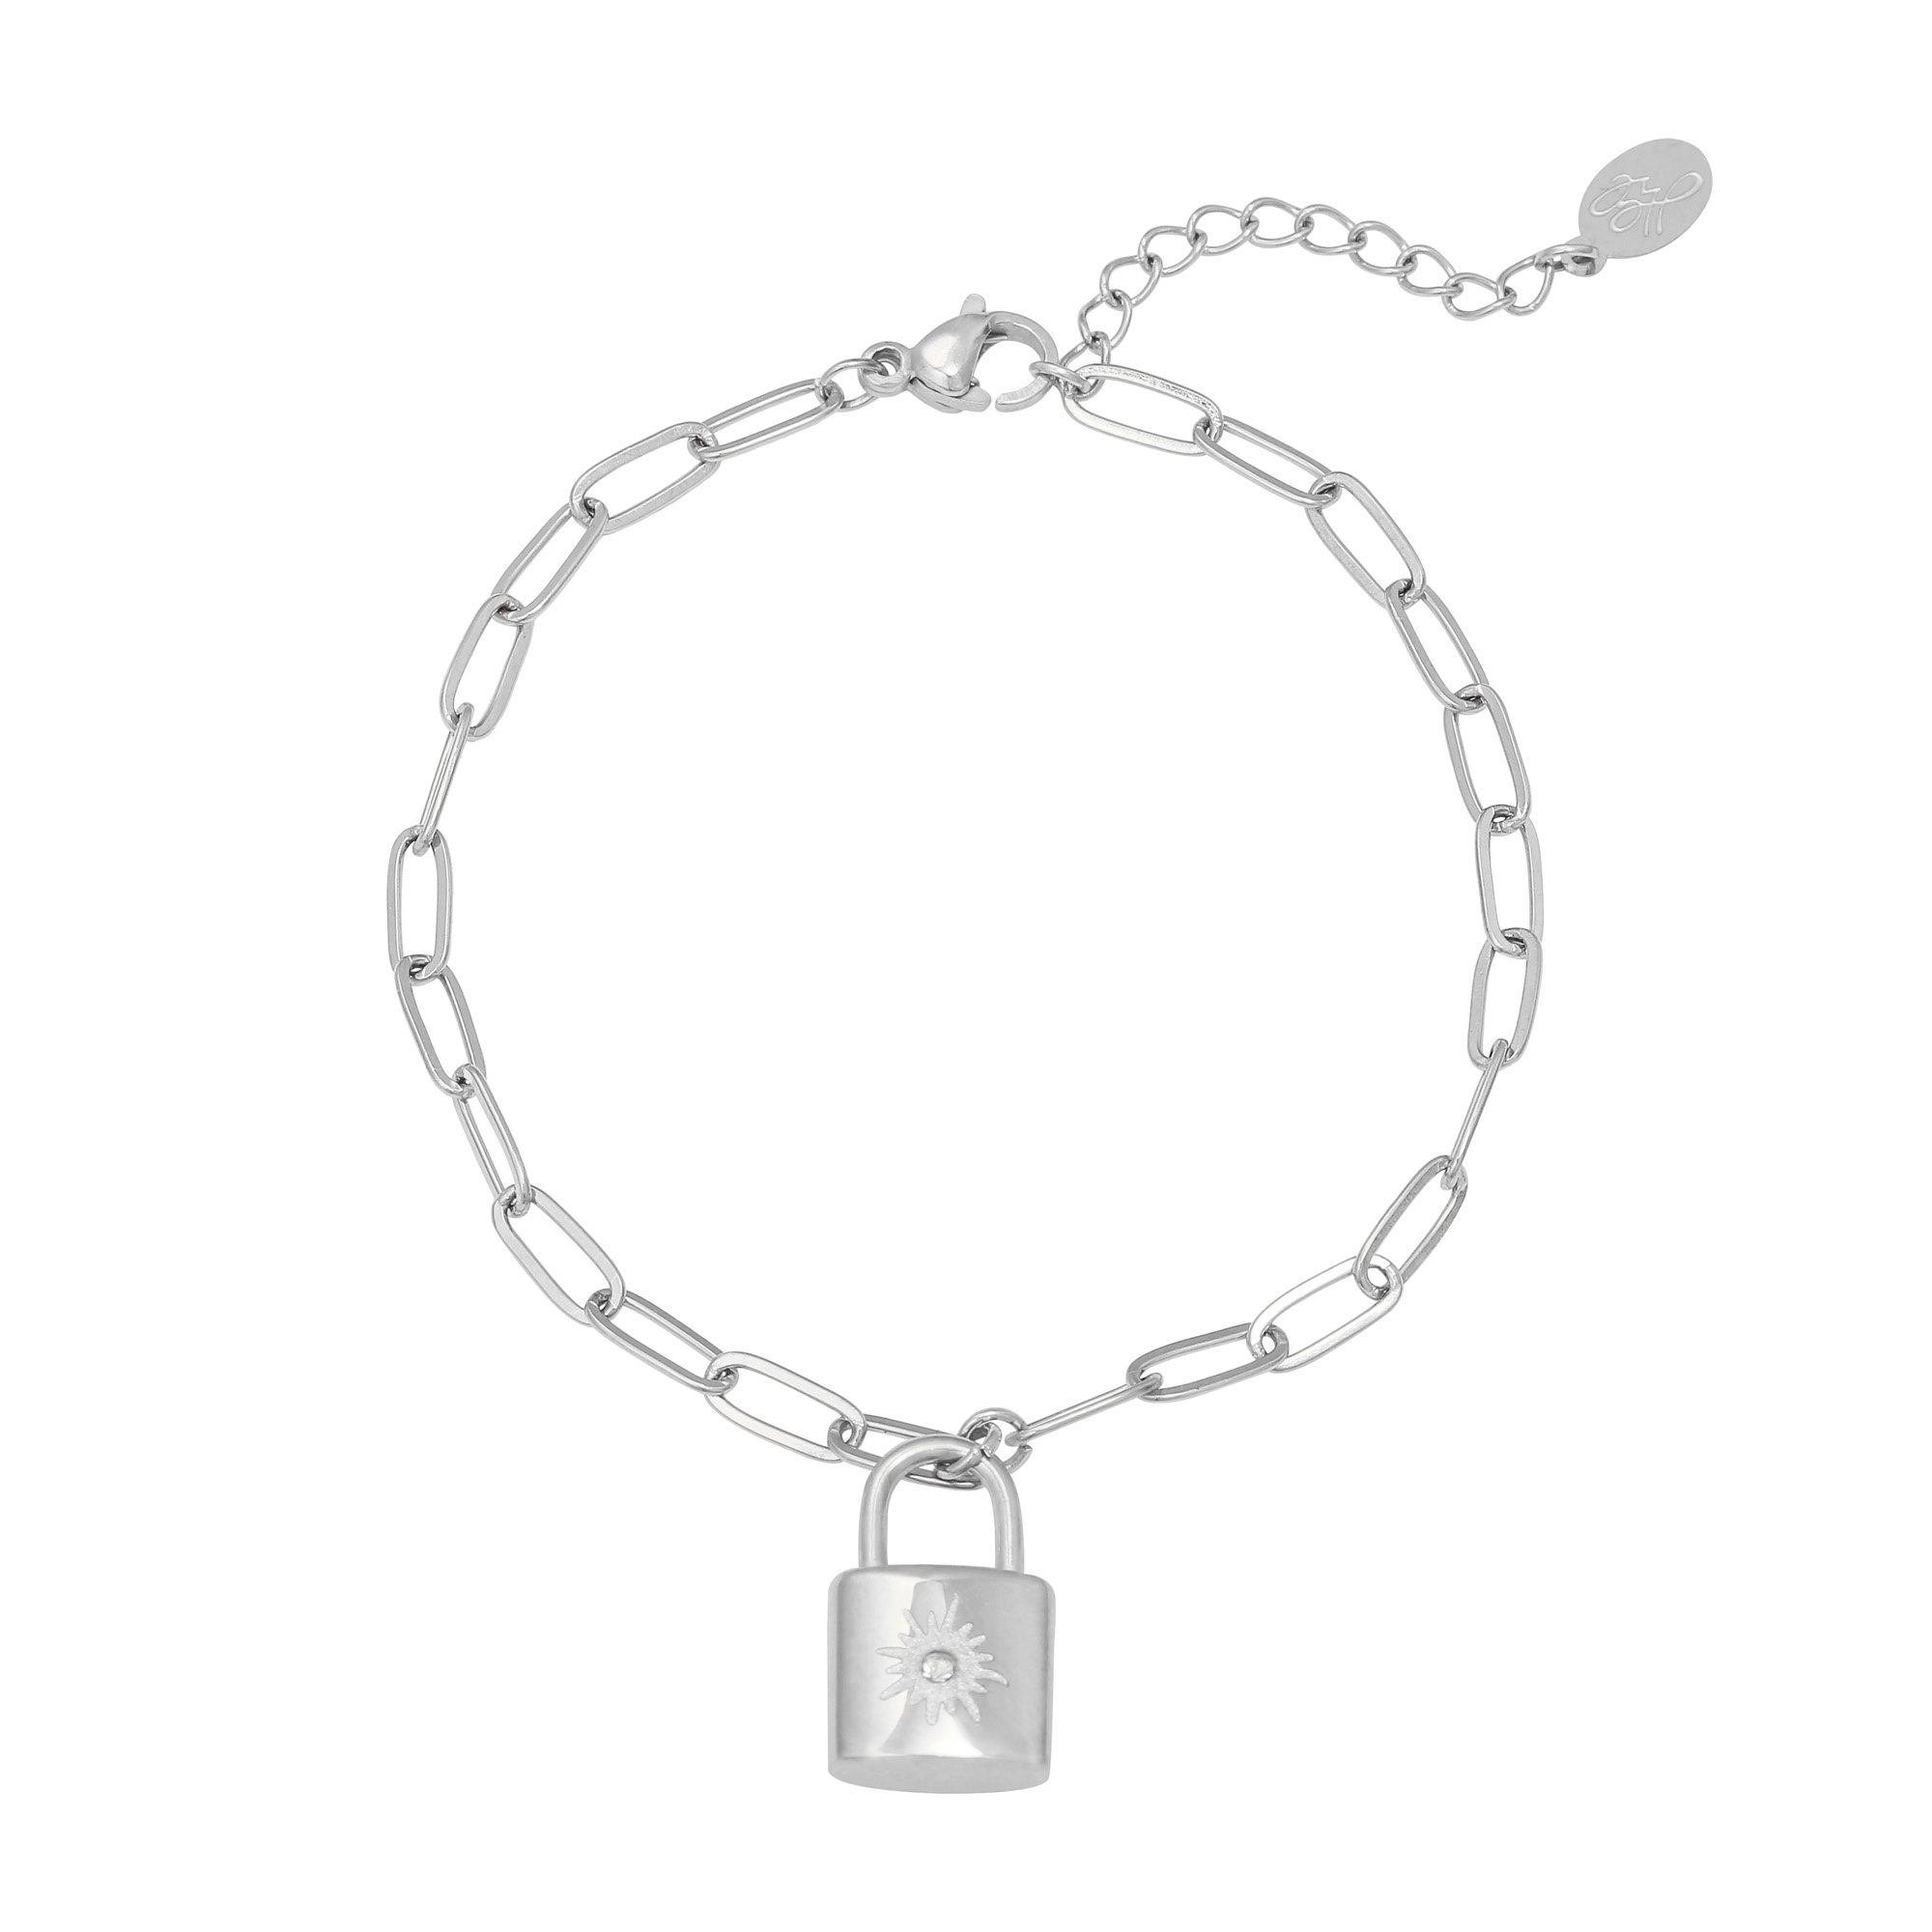 Heart Lock Bracelet & Key Necklace Jewelry Set - OurCoordinates